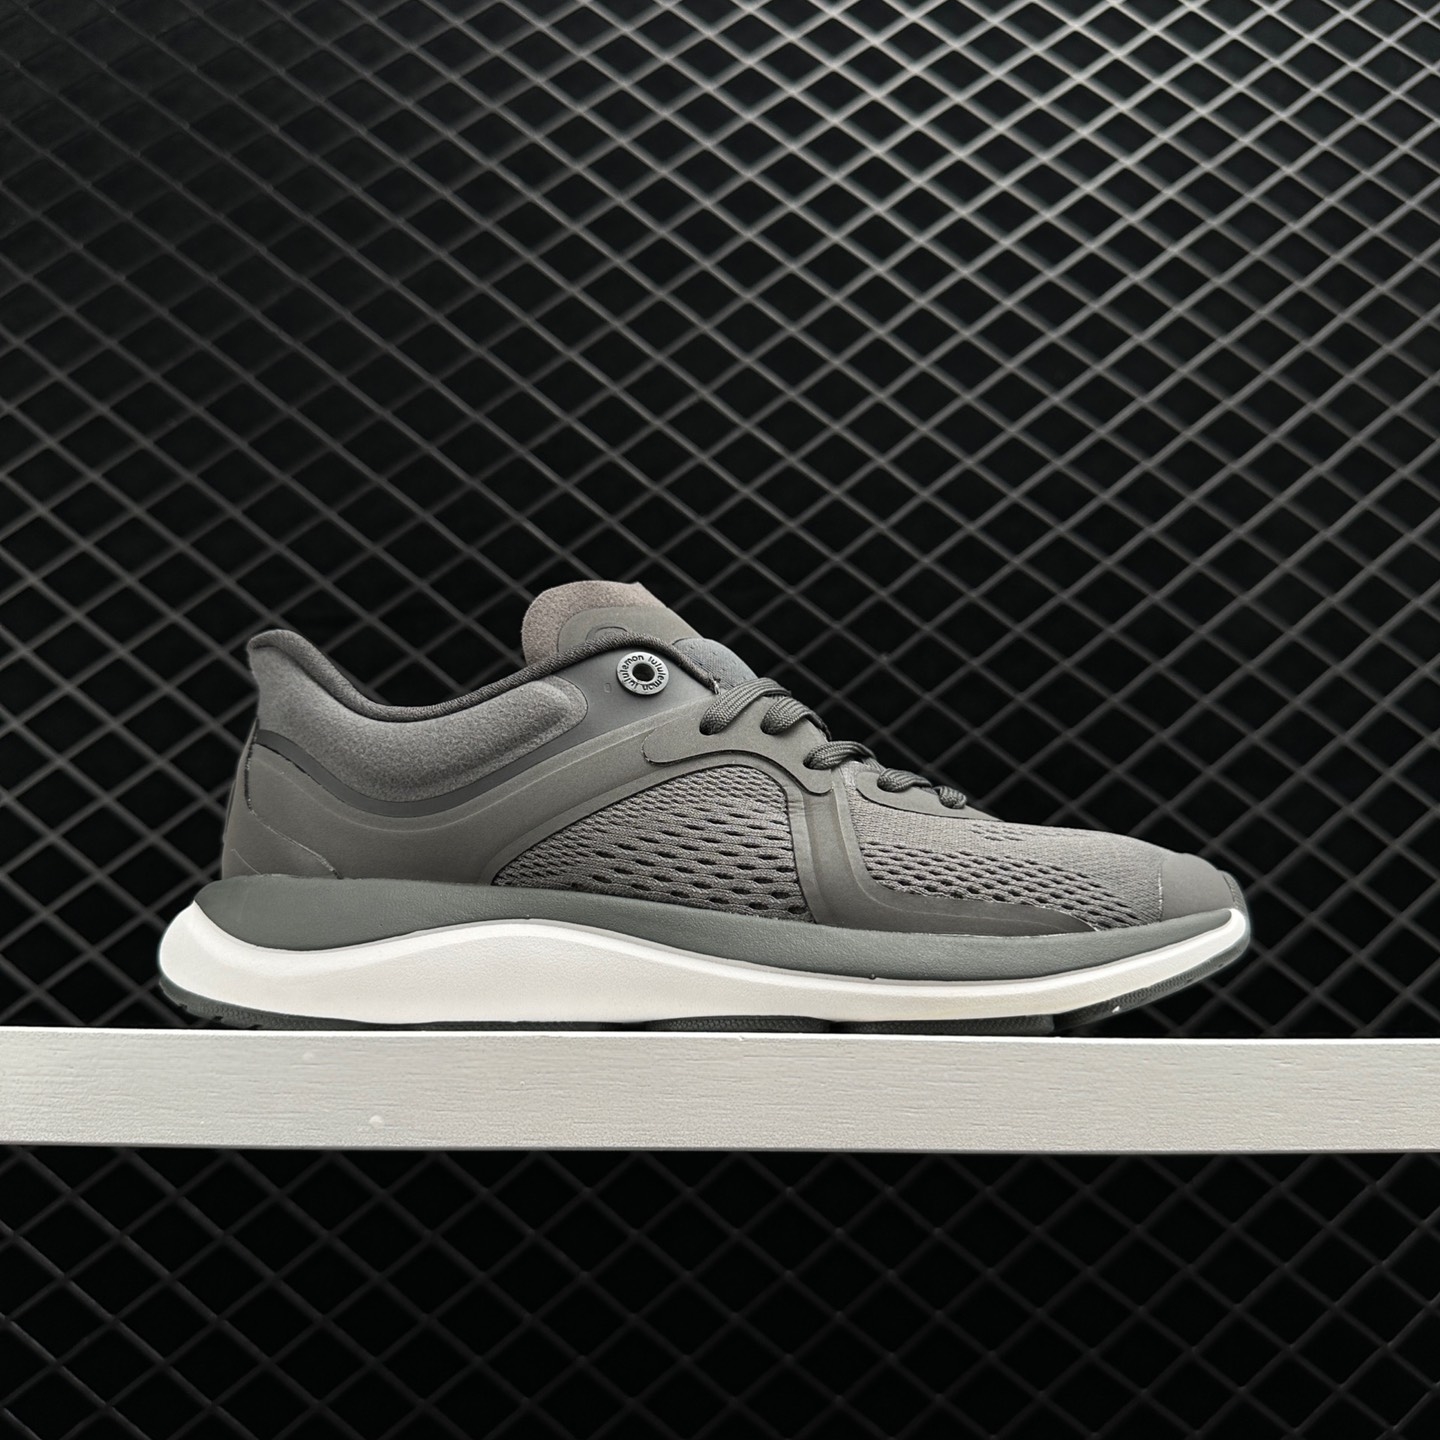 Lululemon Chargefeel Low Workout Shoes - Asphalt Graphite Grey White